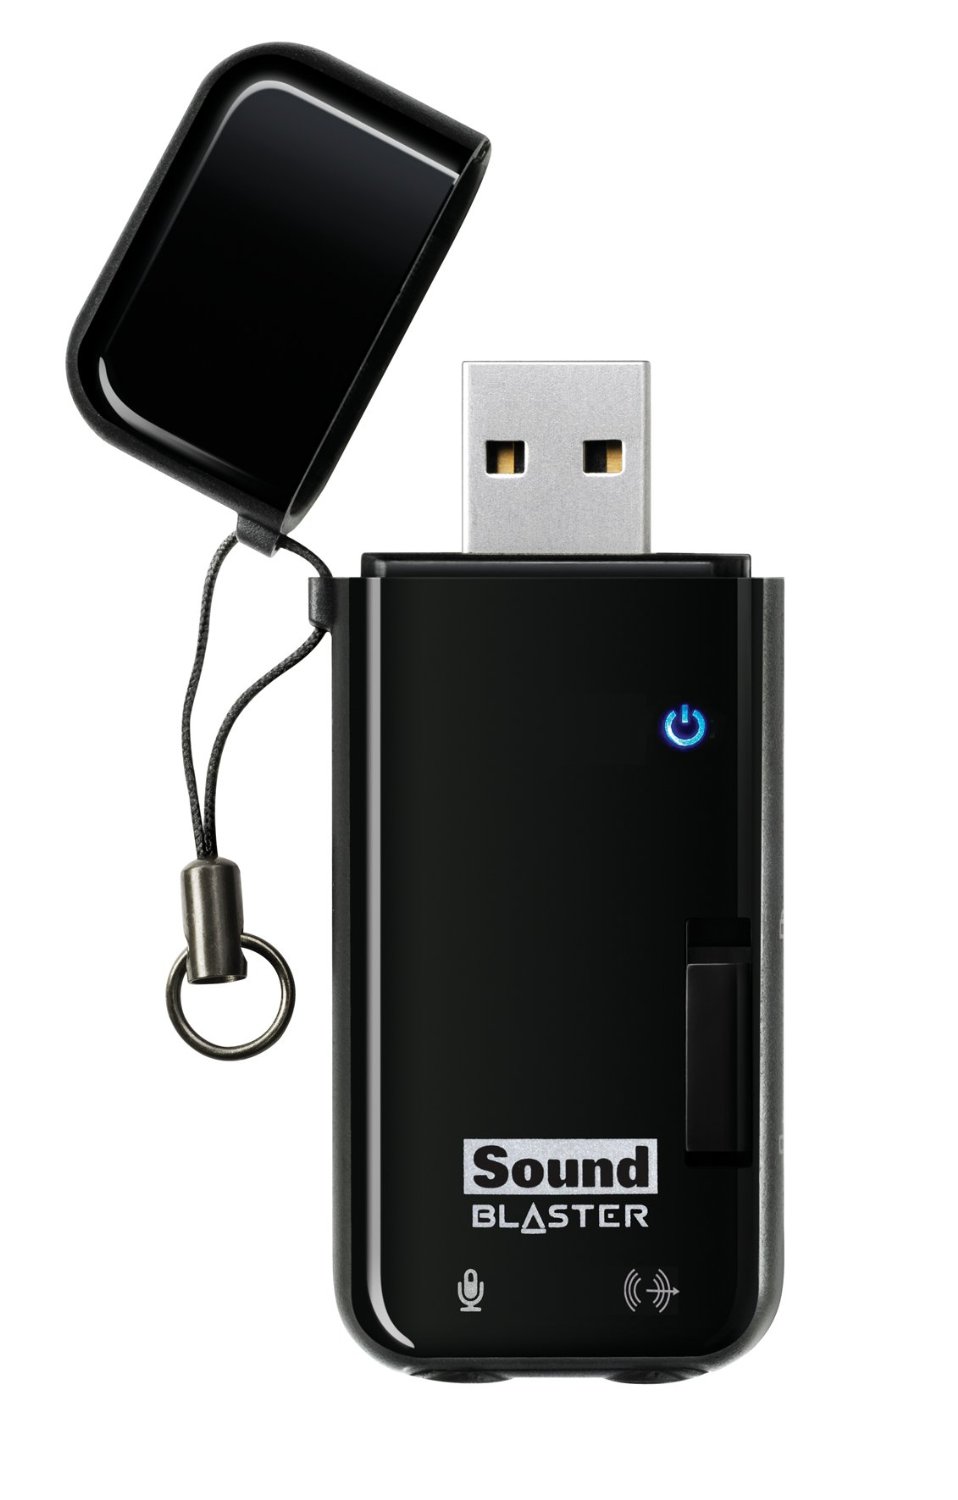 Usb Sound Card Windows 10